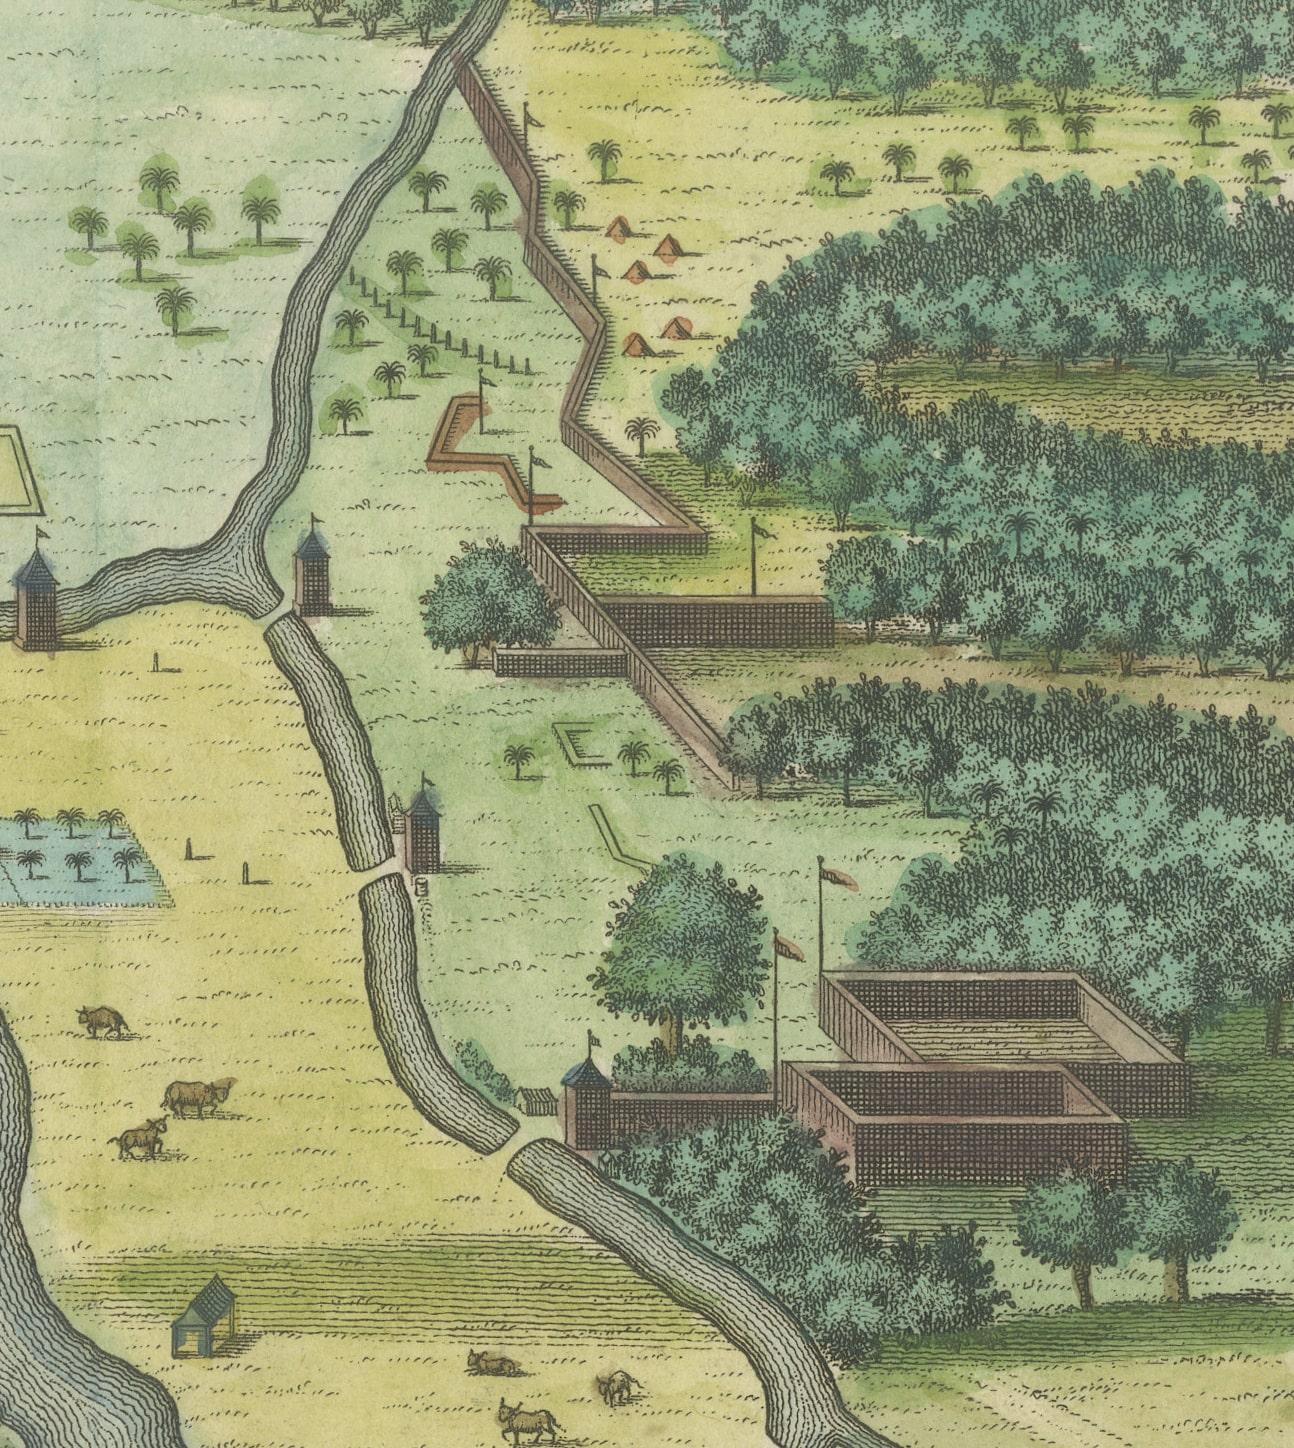 Mid-18th Century 1763 Batavia: A Detailed Bird's-Eye View of Jakarta in the Dutch Colonial Era